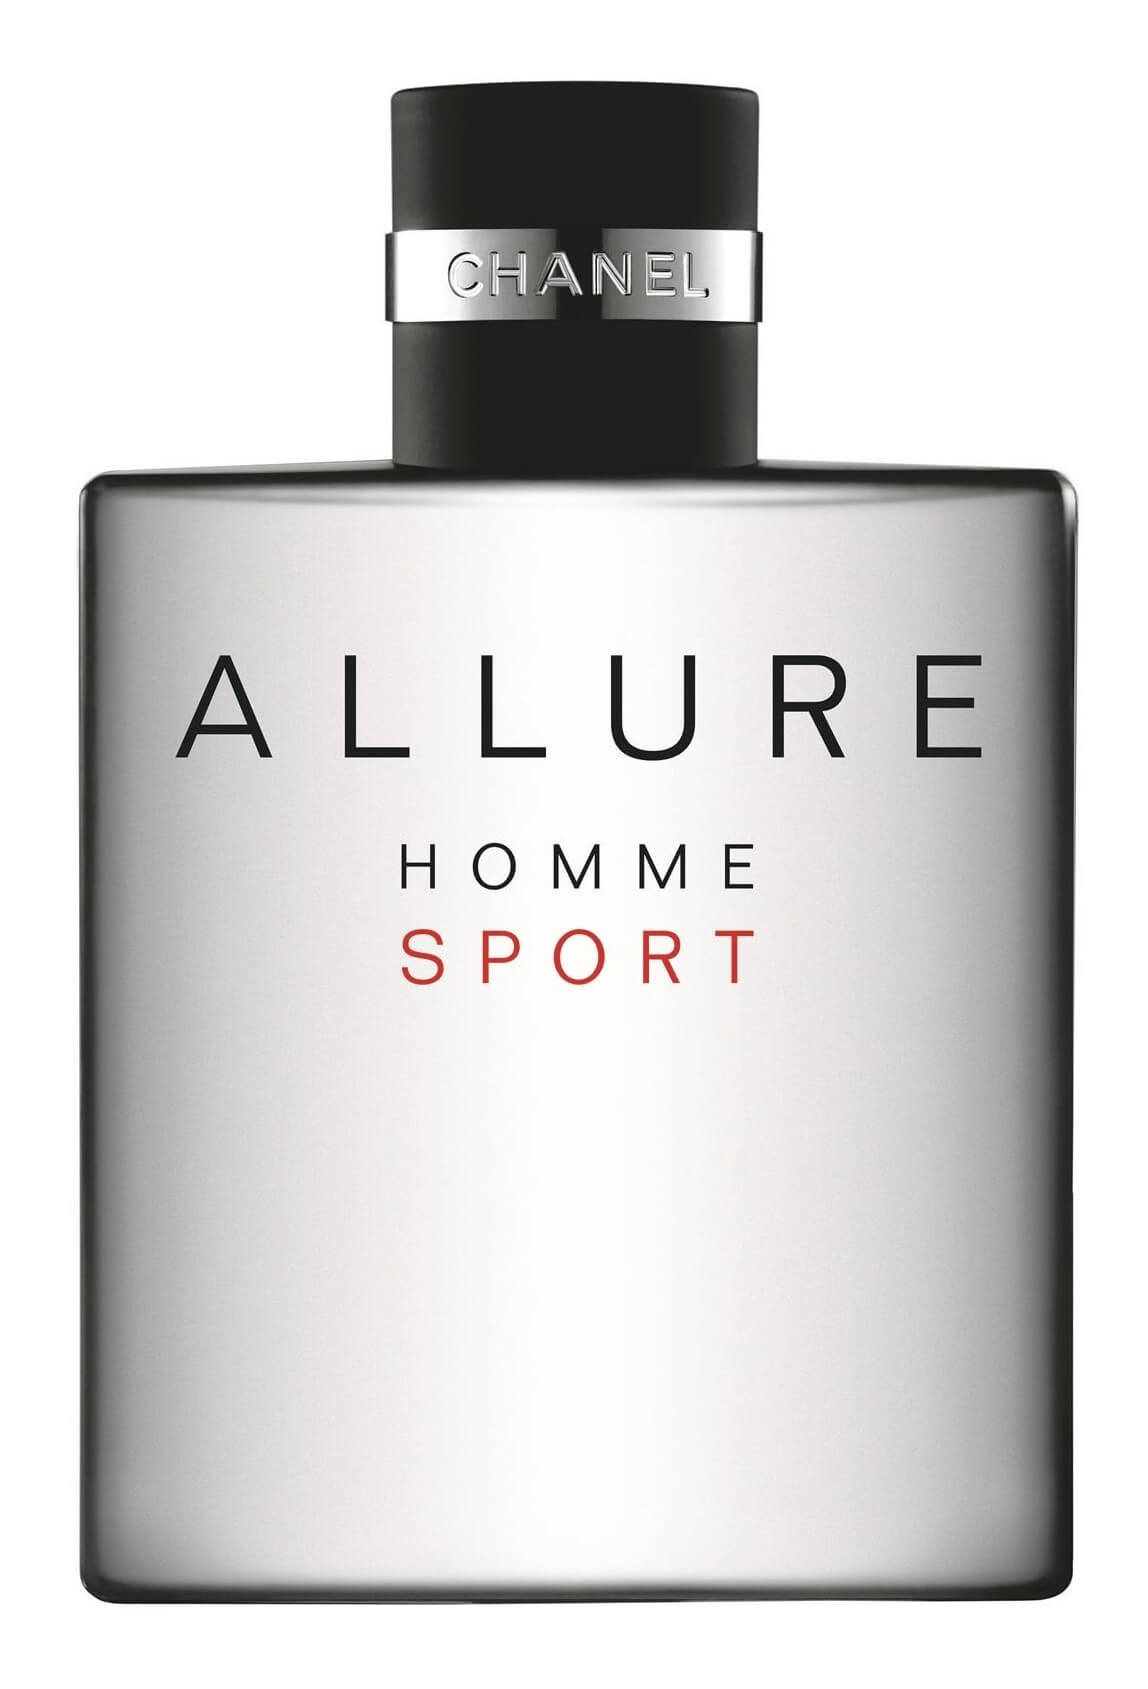 Allure homme sport оригинал. Шанель Аллюр спорт 100мл. Chanel Allure homme Sport. Chanel Allure homme Sport 100ml. Chanel Allure homme Sport EDT 100 ml.